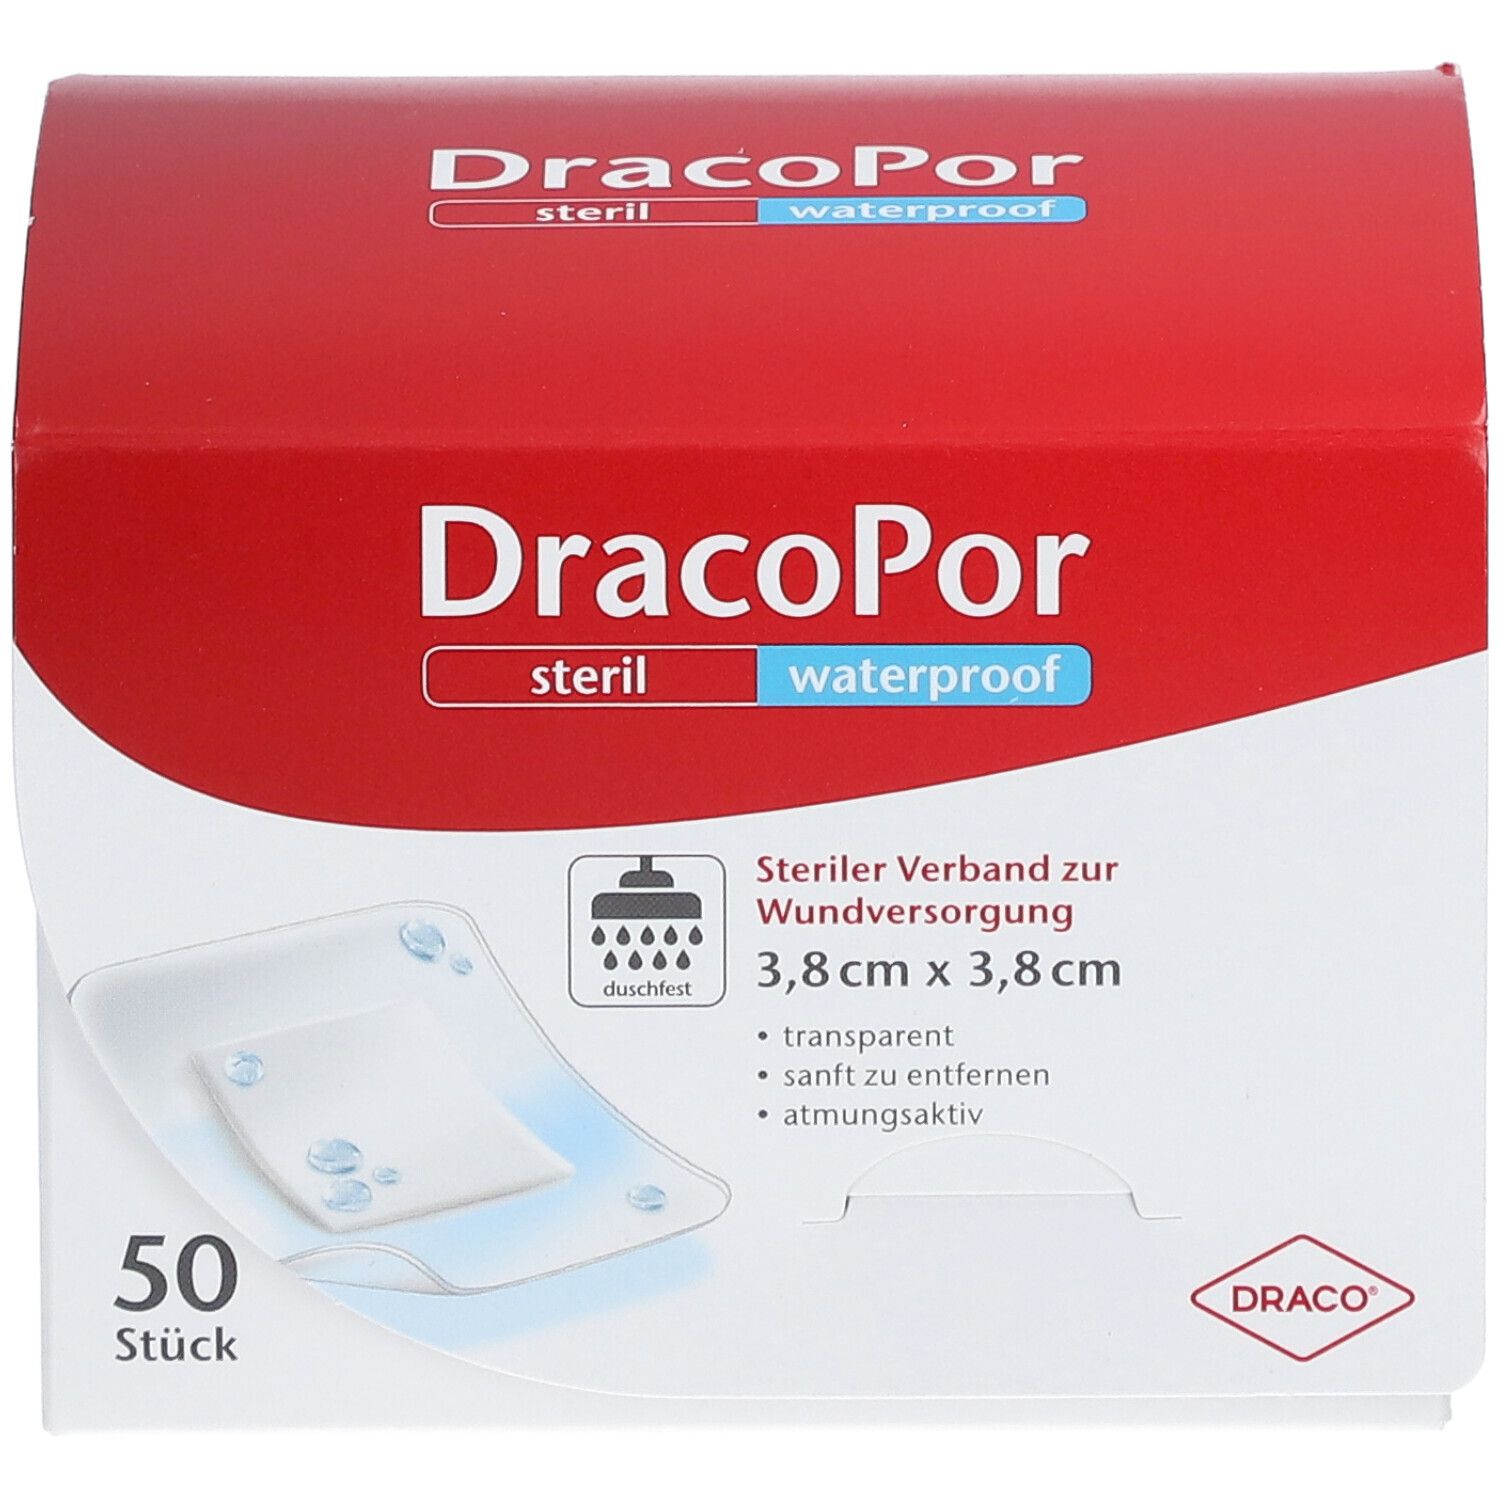 DracoPor Waterproof Wundverband 3,8 cm x 3,8 cm